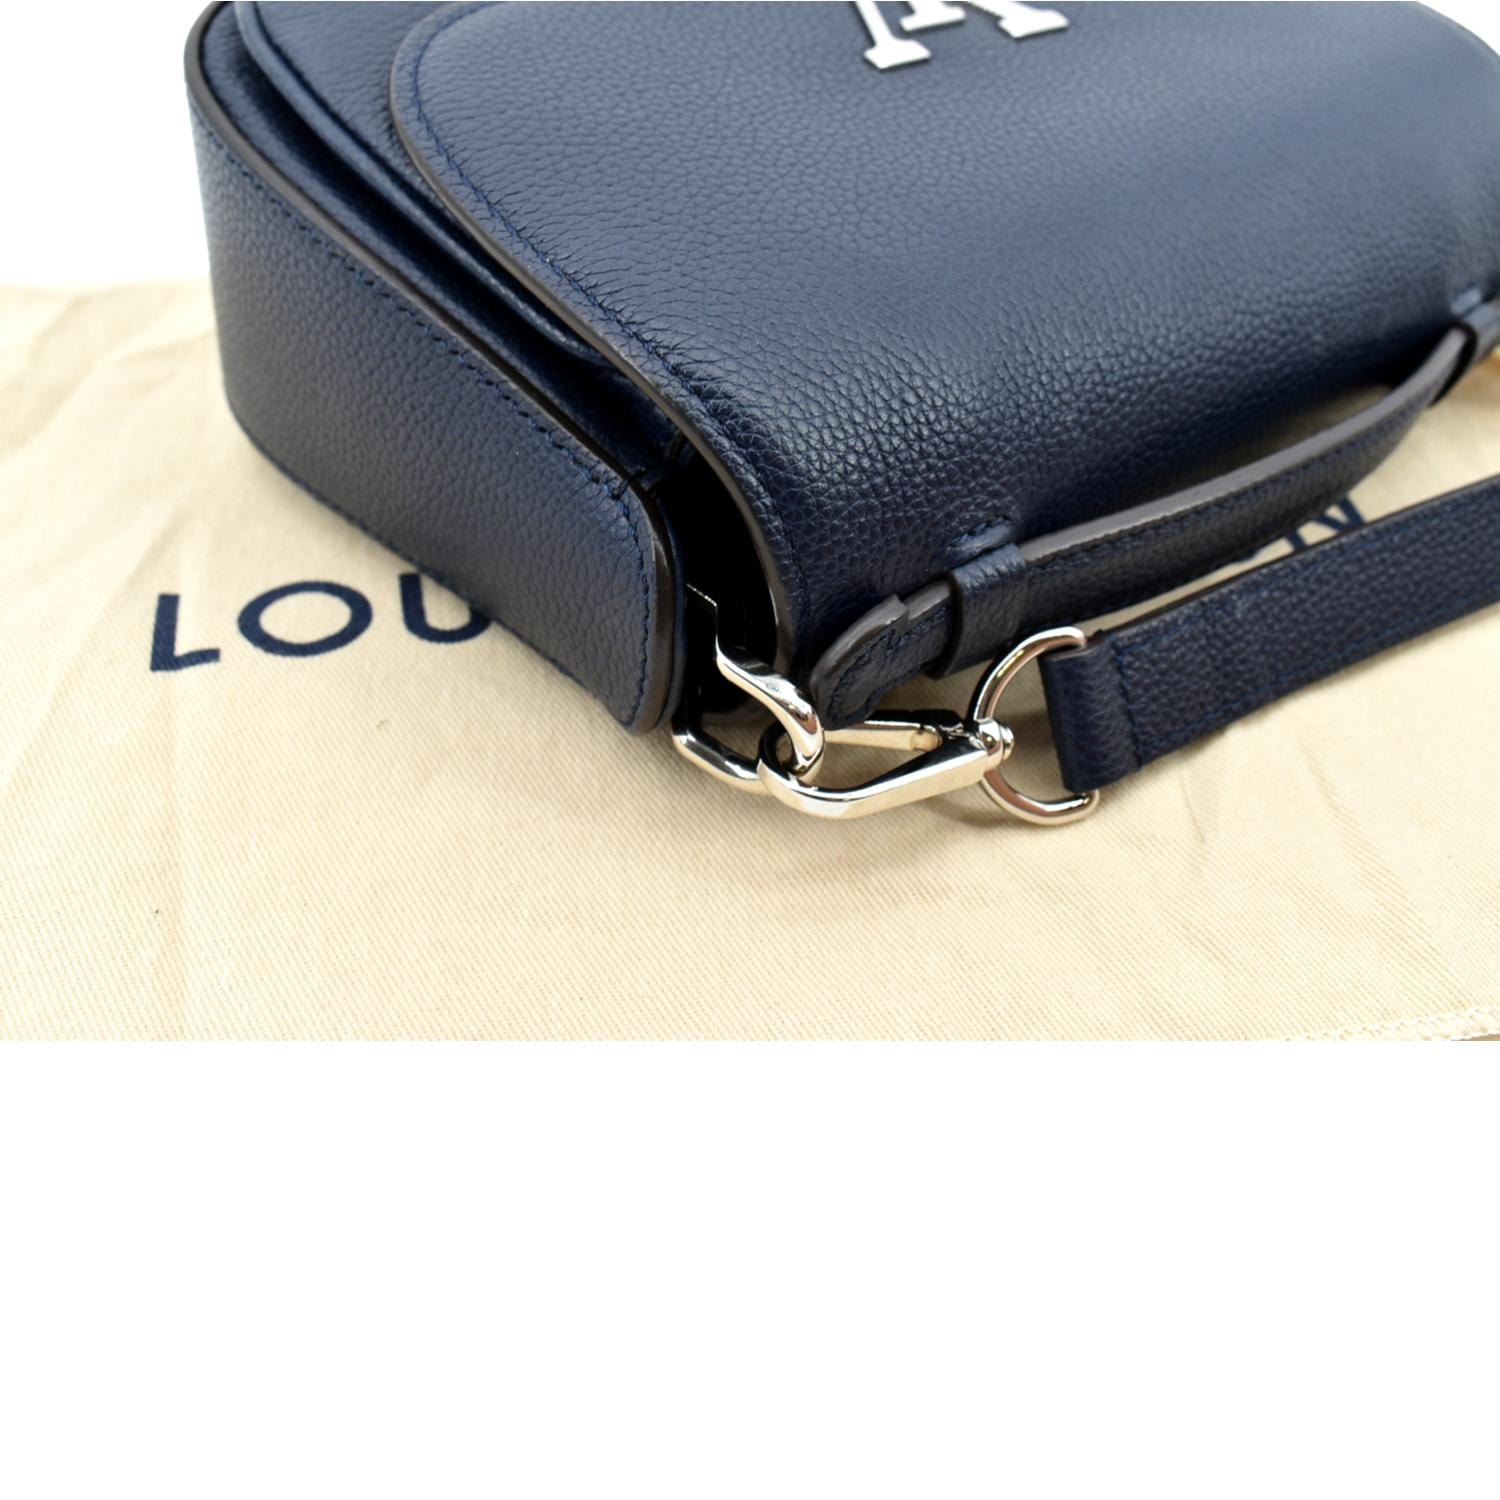 Louis Vuitton Vivienne Bag Back From Repair Crossbody Clutch